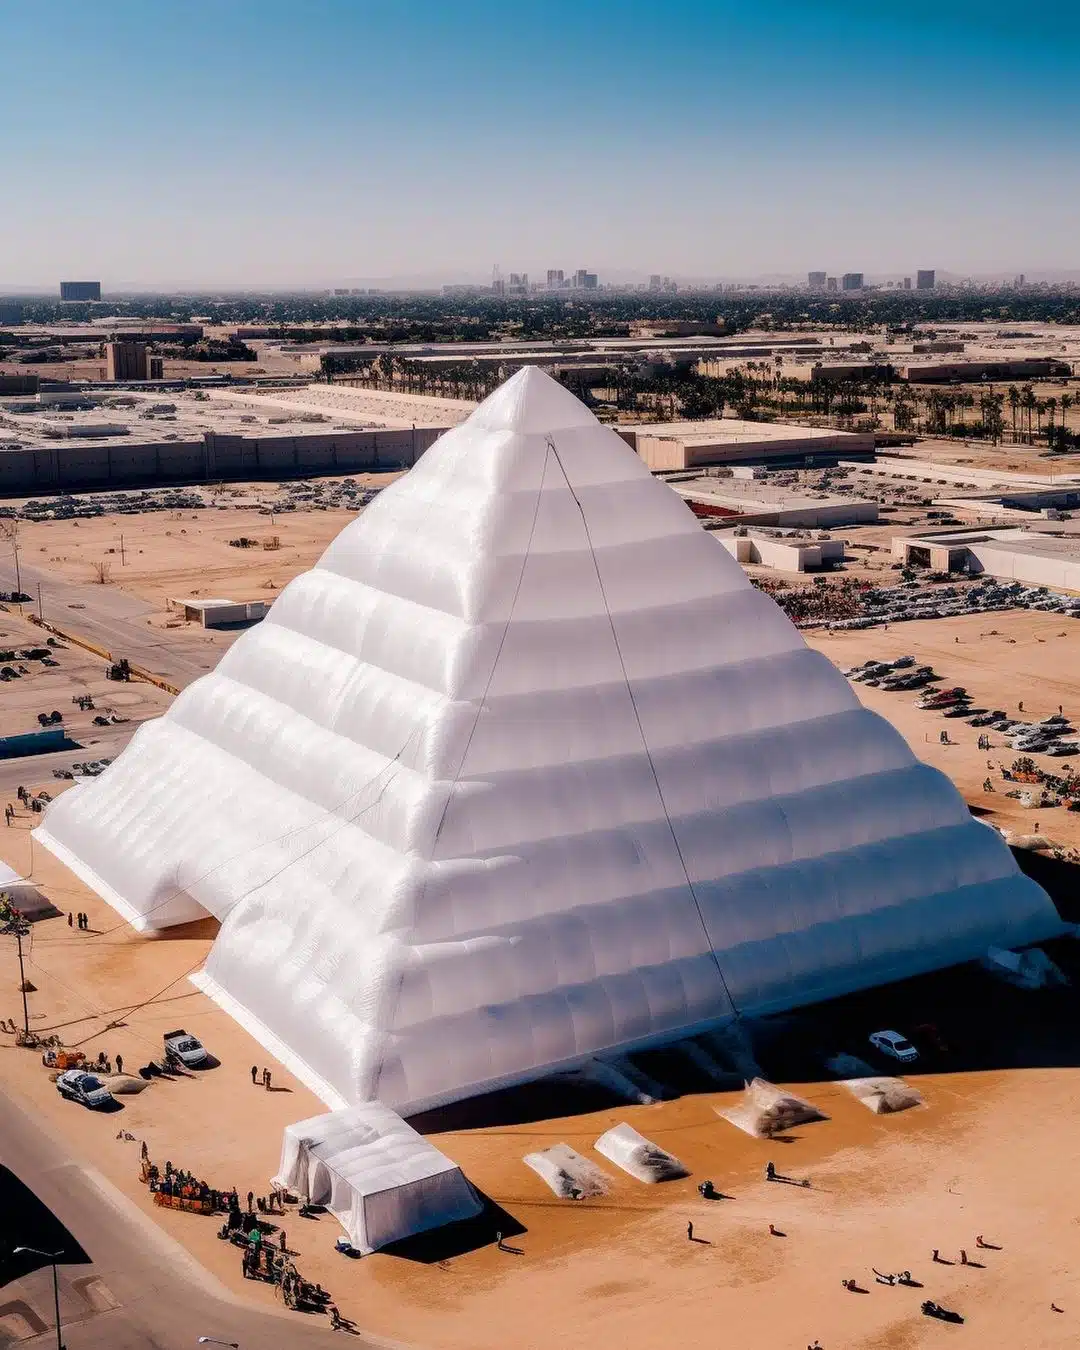 IA por Joann piraamides egiptom giza